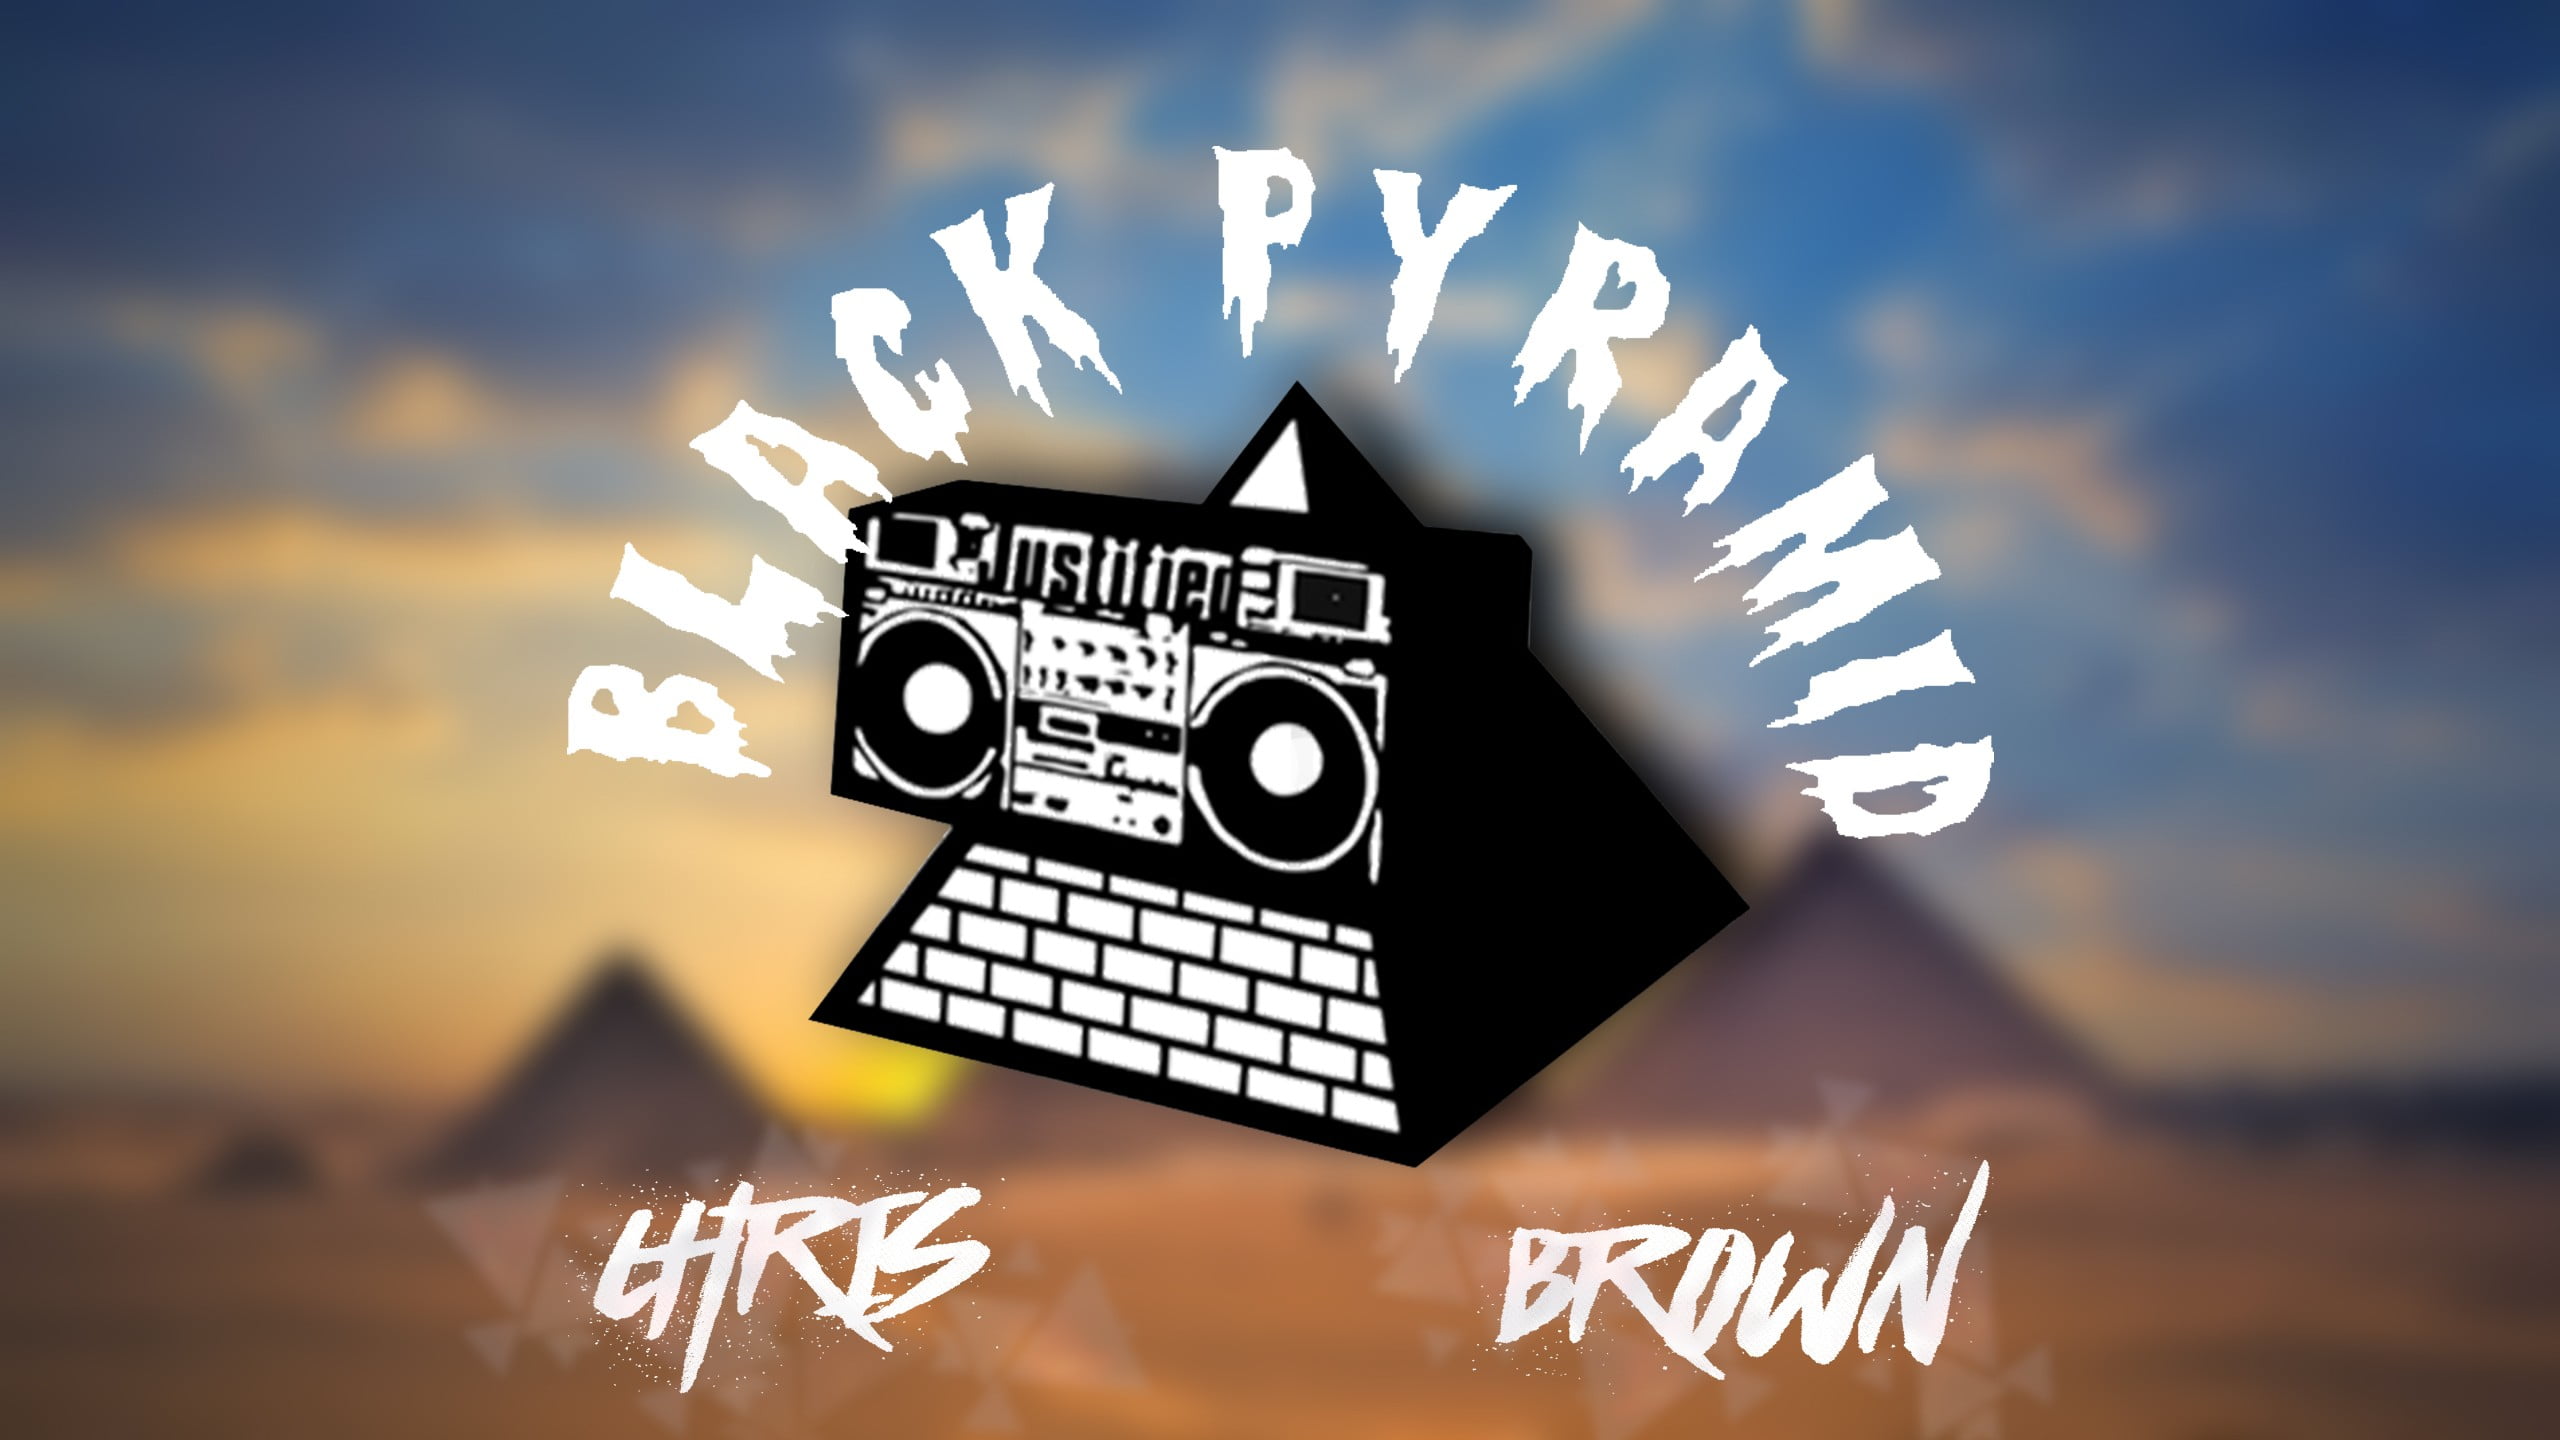 Black Pyramid Chris Brown album wallpaper, black pyramid, chris brown, breezy